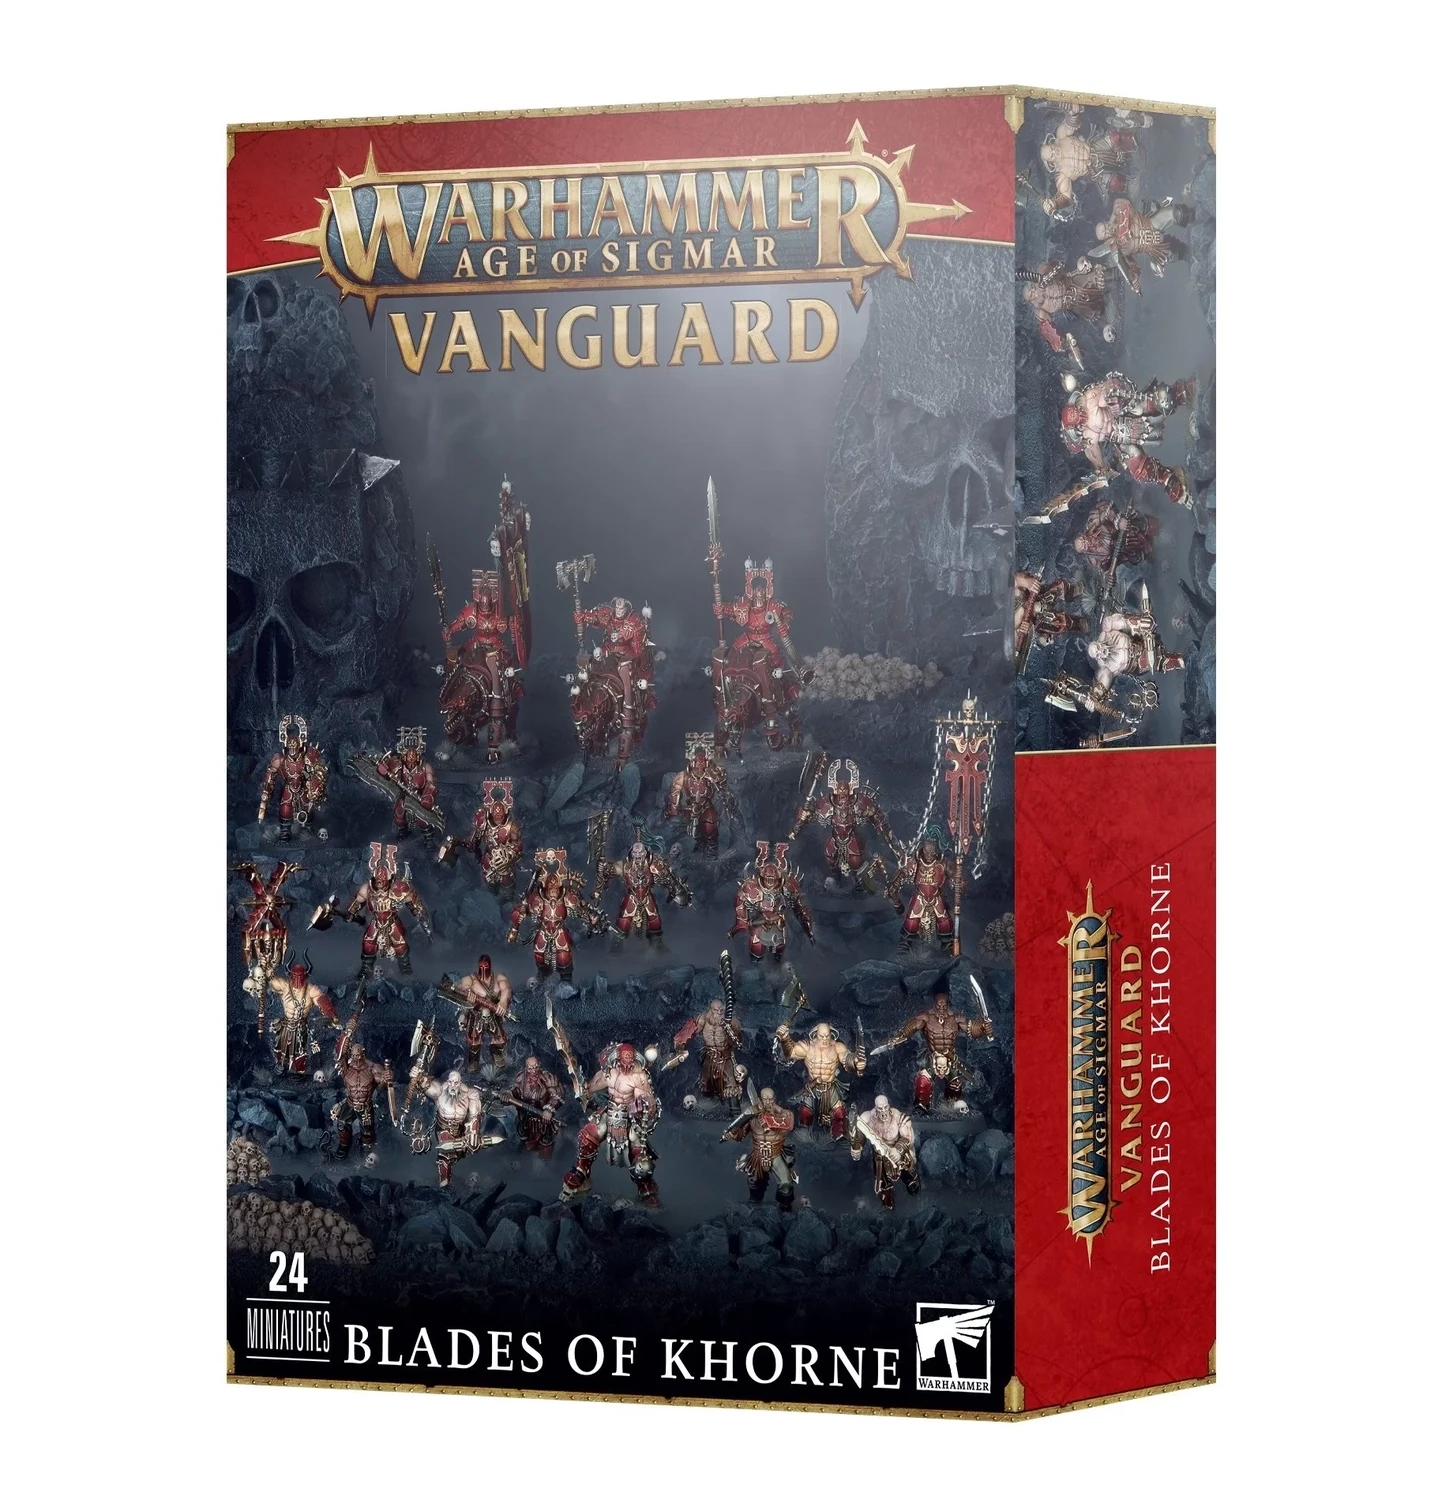 Warhammer, Age of Sigmar, Vanguard: Blades of Khorne